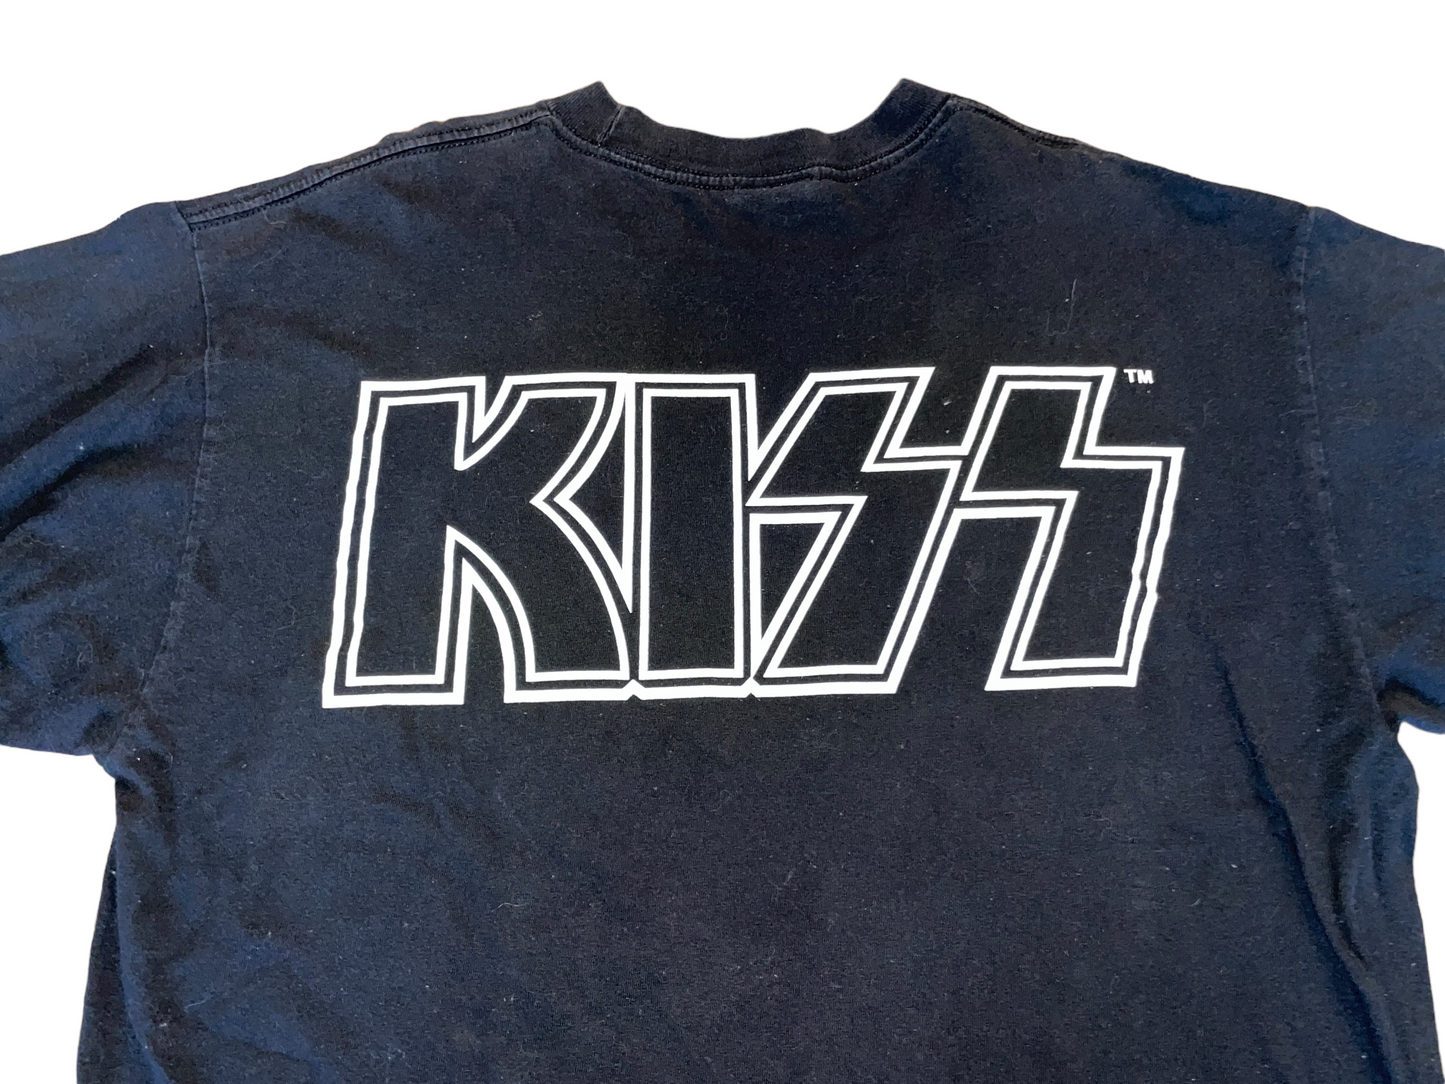 Vintage 2000's Kiss T-Shirt